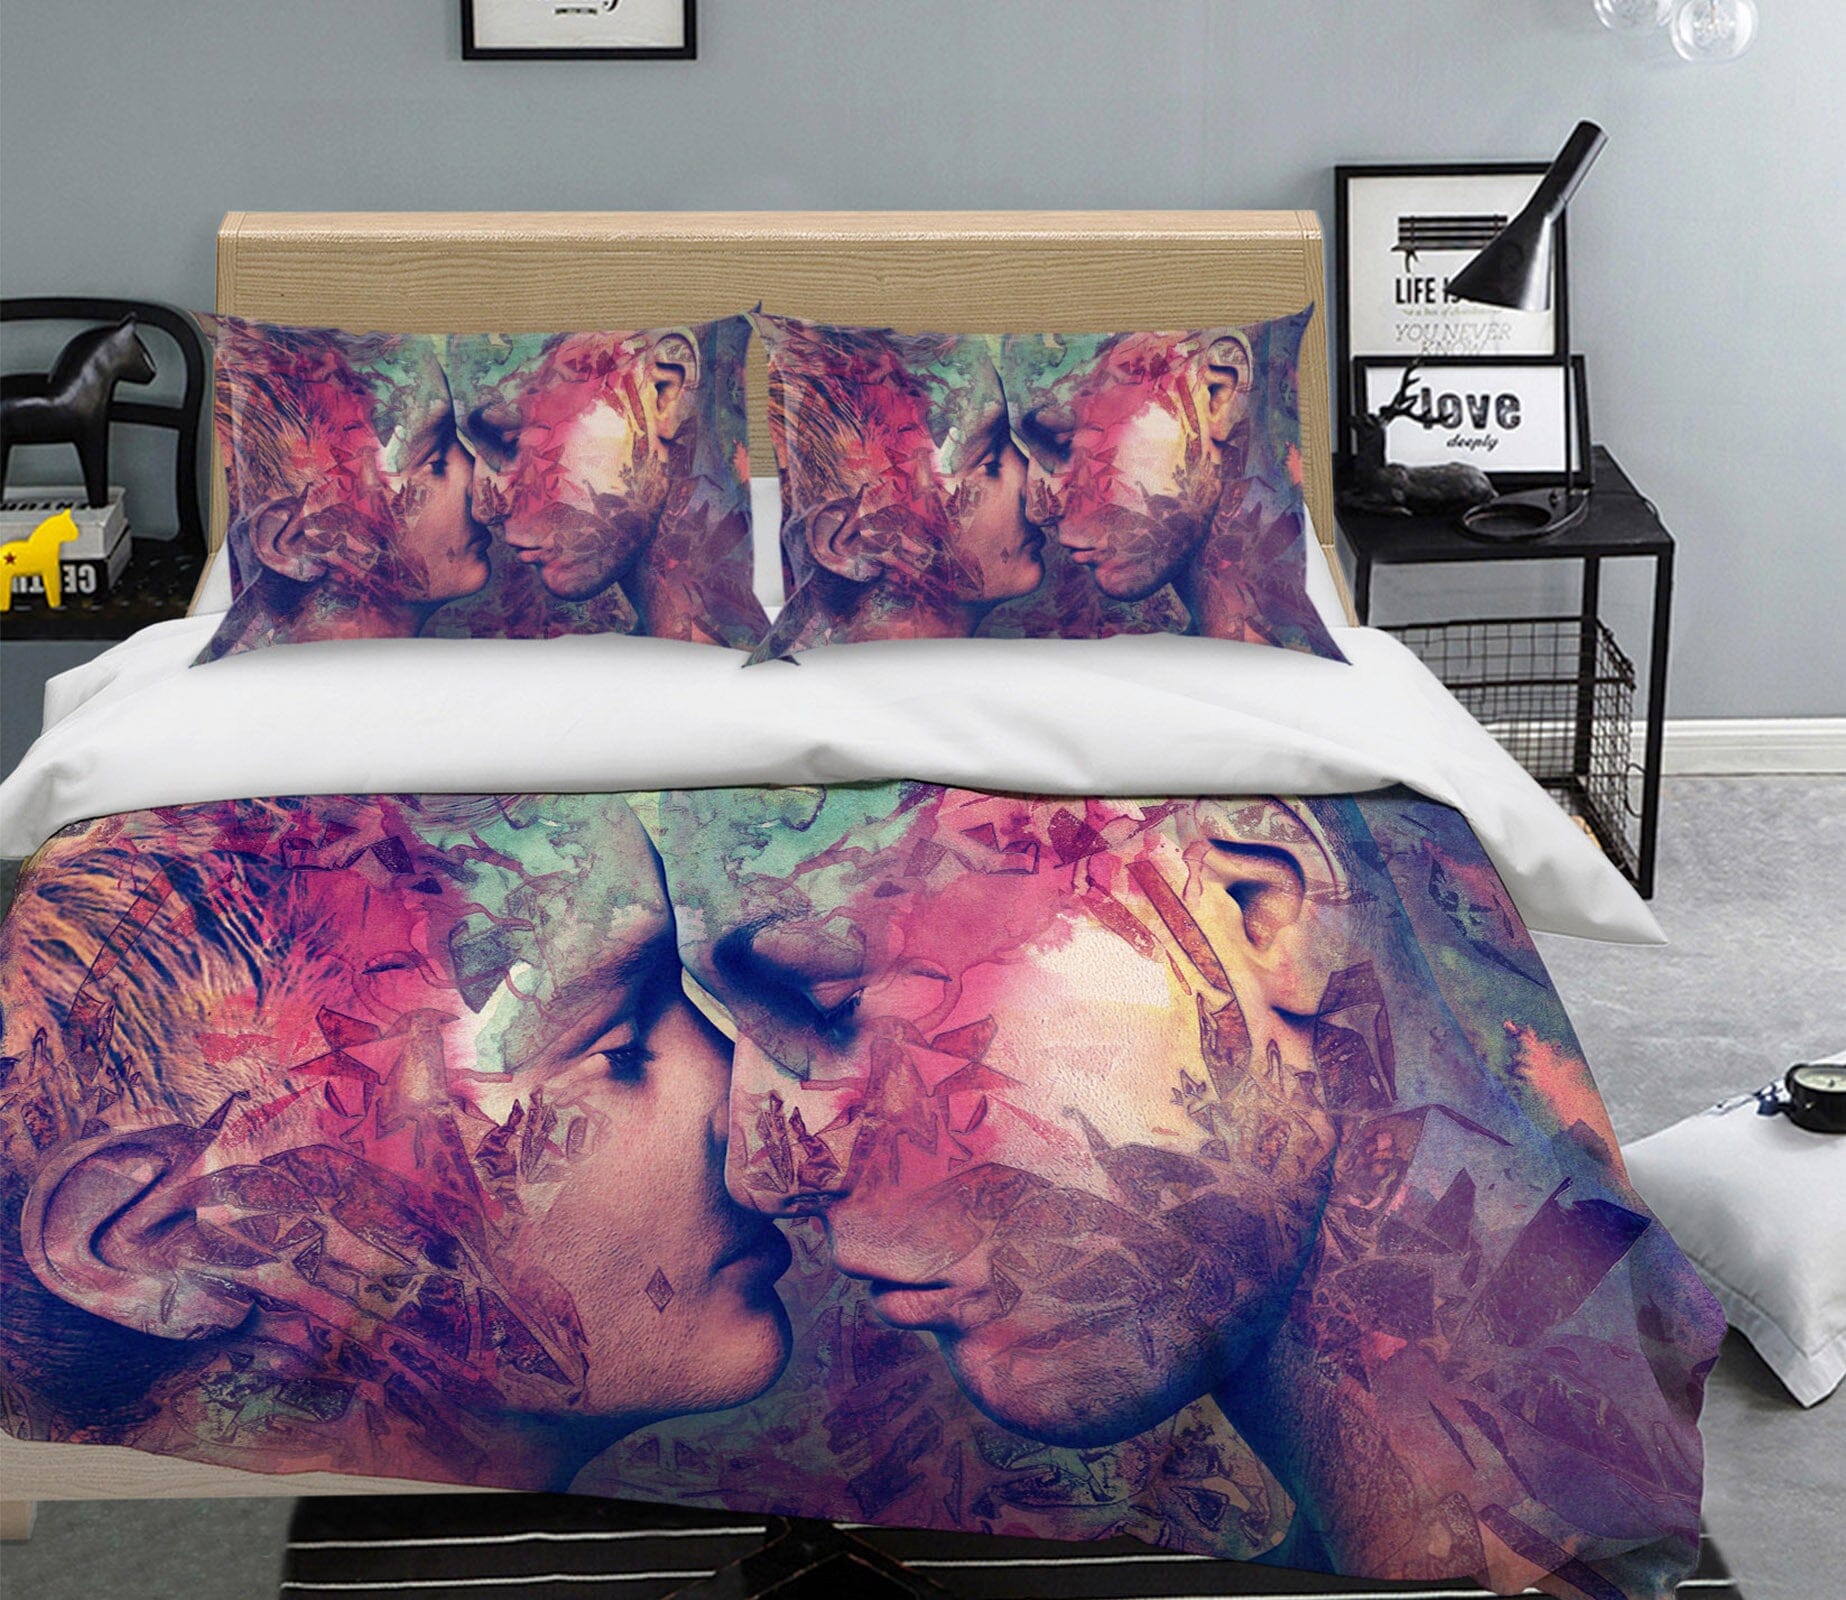 3D Graffiti Love 2006 Marco Cavazzana Bedding Bed Pillowcases Quilt Quiet Covers AJ Creativity Home 